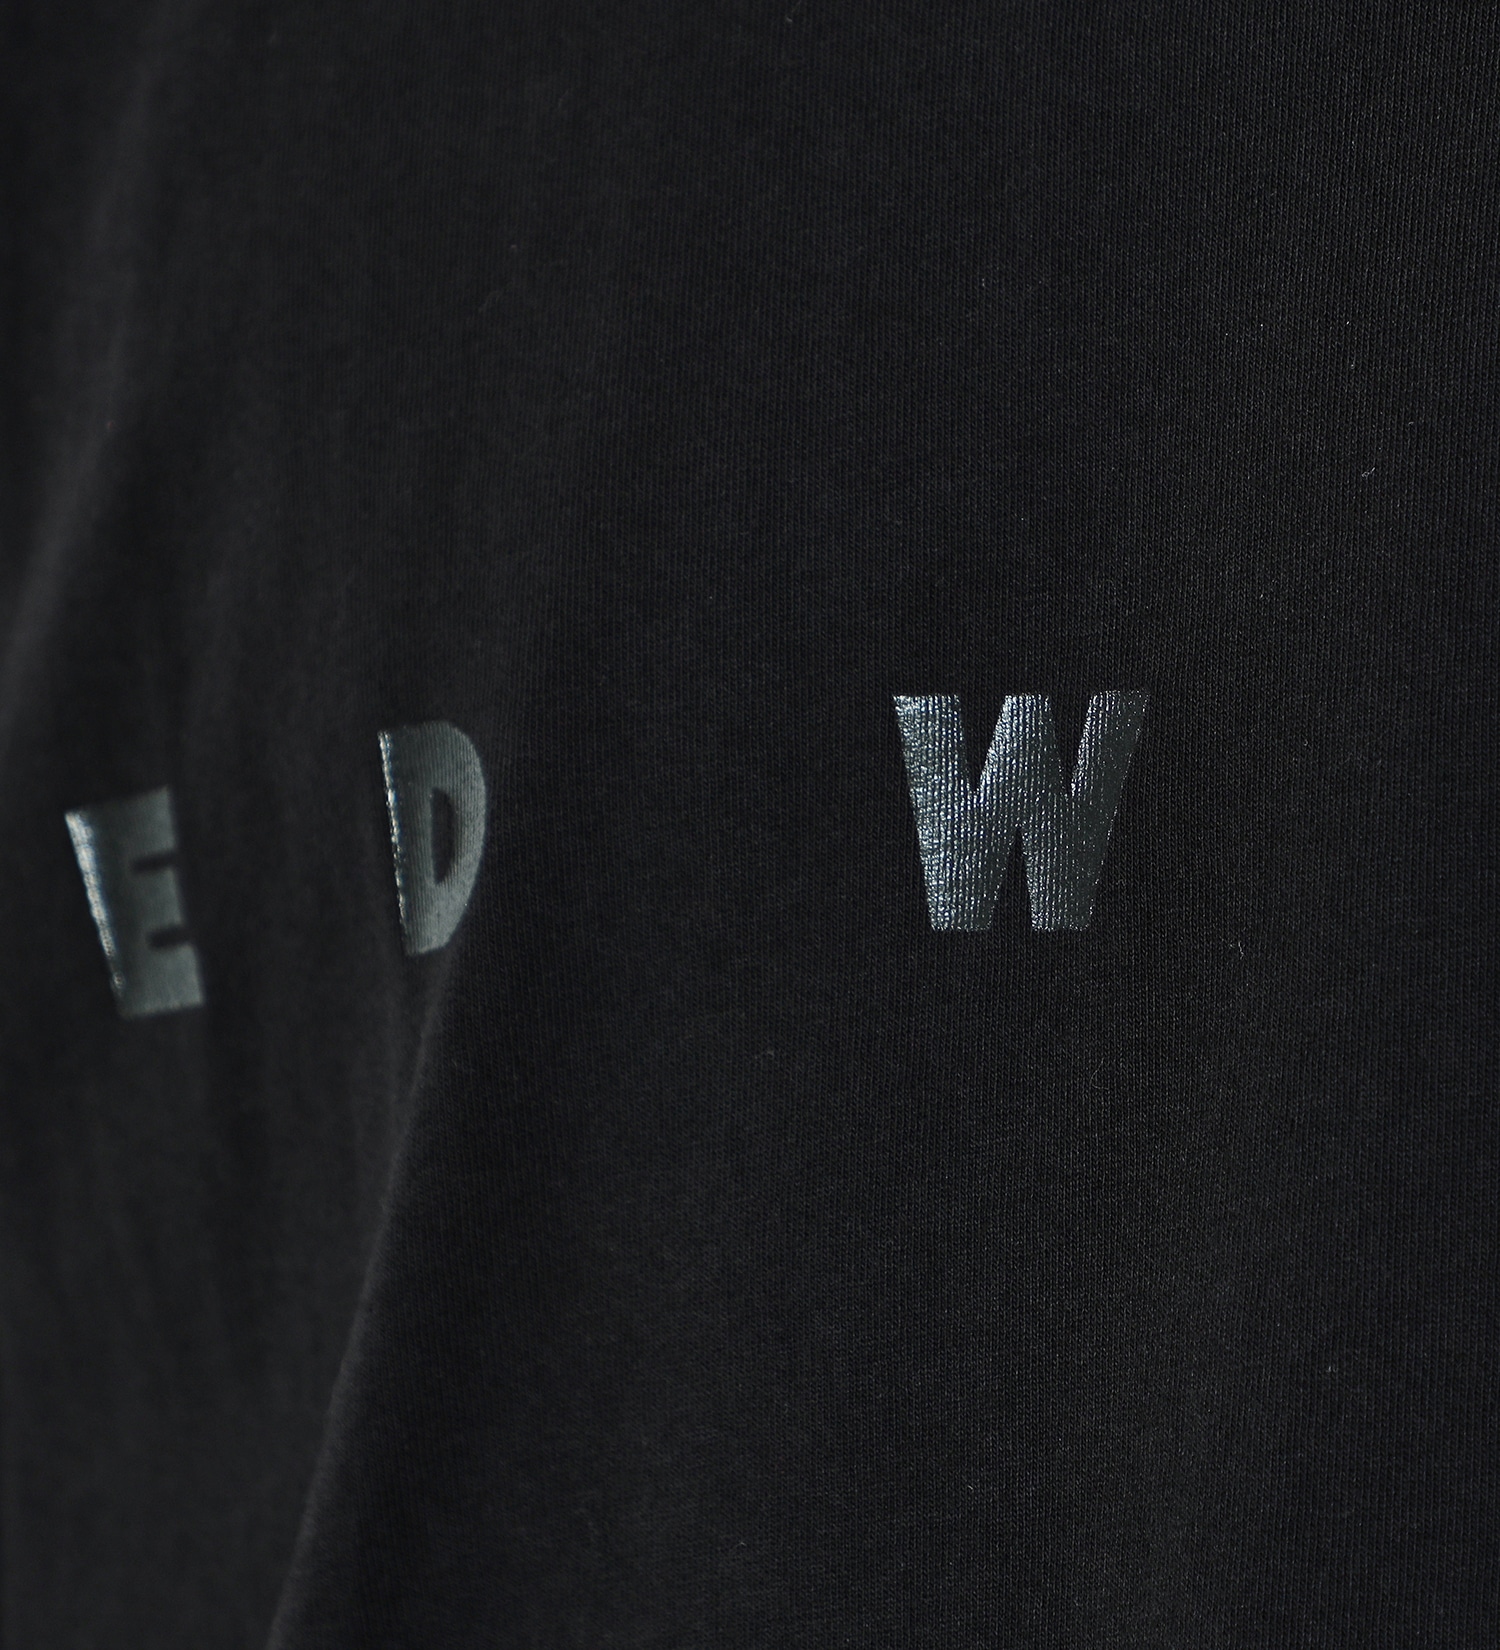 EDWIN(エドウイン)の【試着対象】A KIND OF BLACK BIG FIT Tシャツ|トップス/Tシャツ/カットソー/メンズ|ブラック